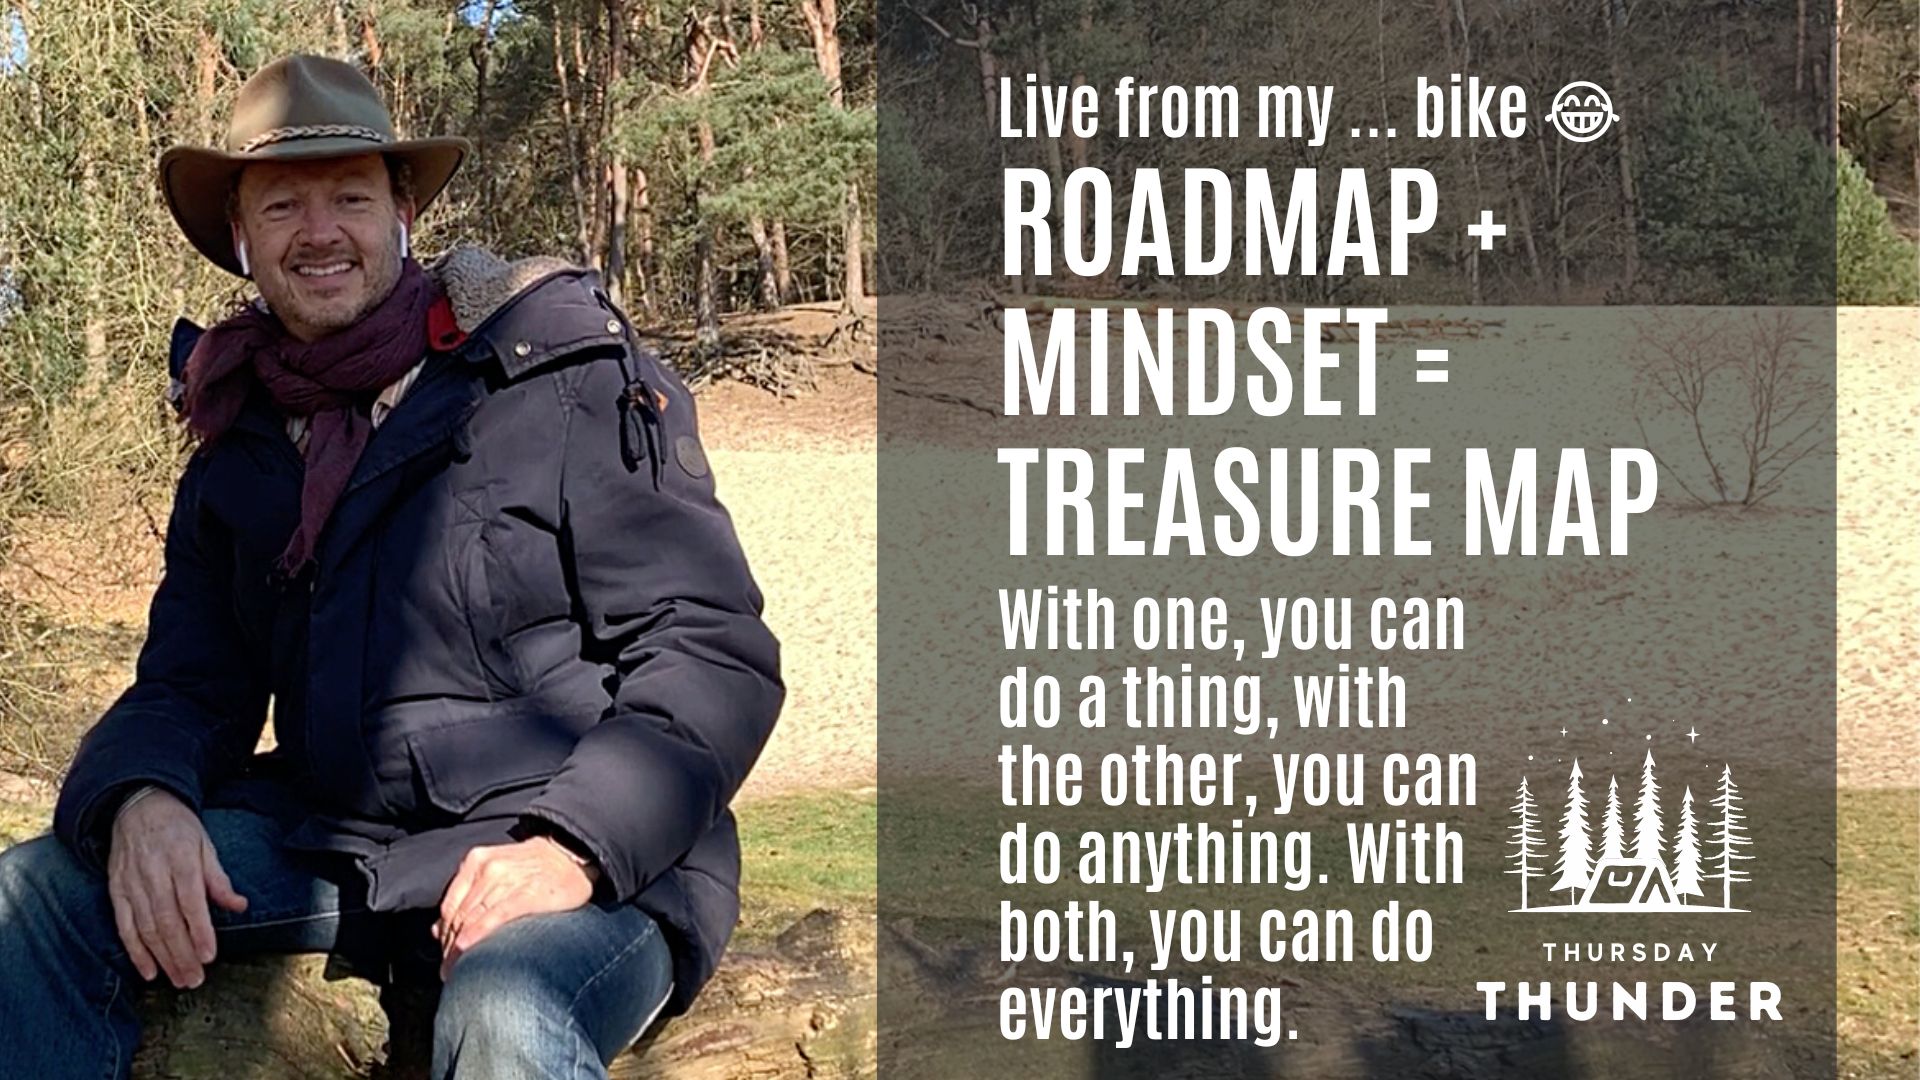 Roadmap + Mindset = Treasure Map